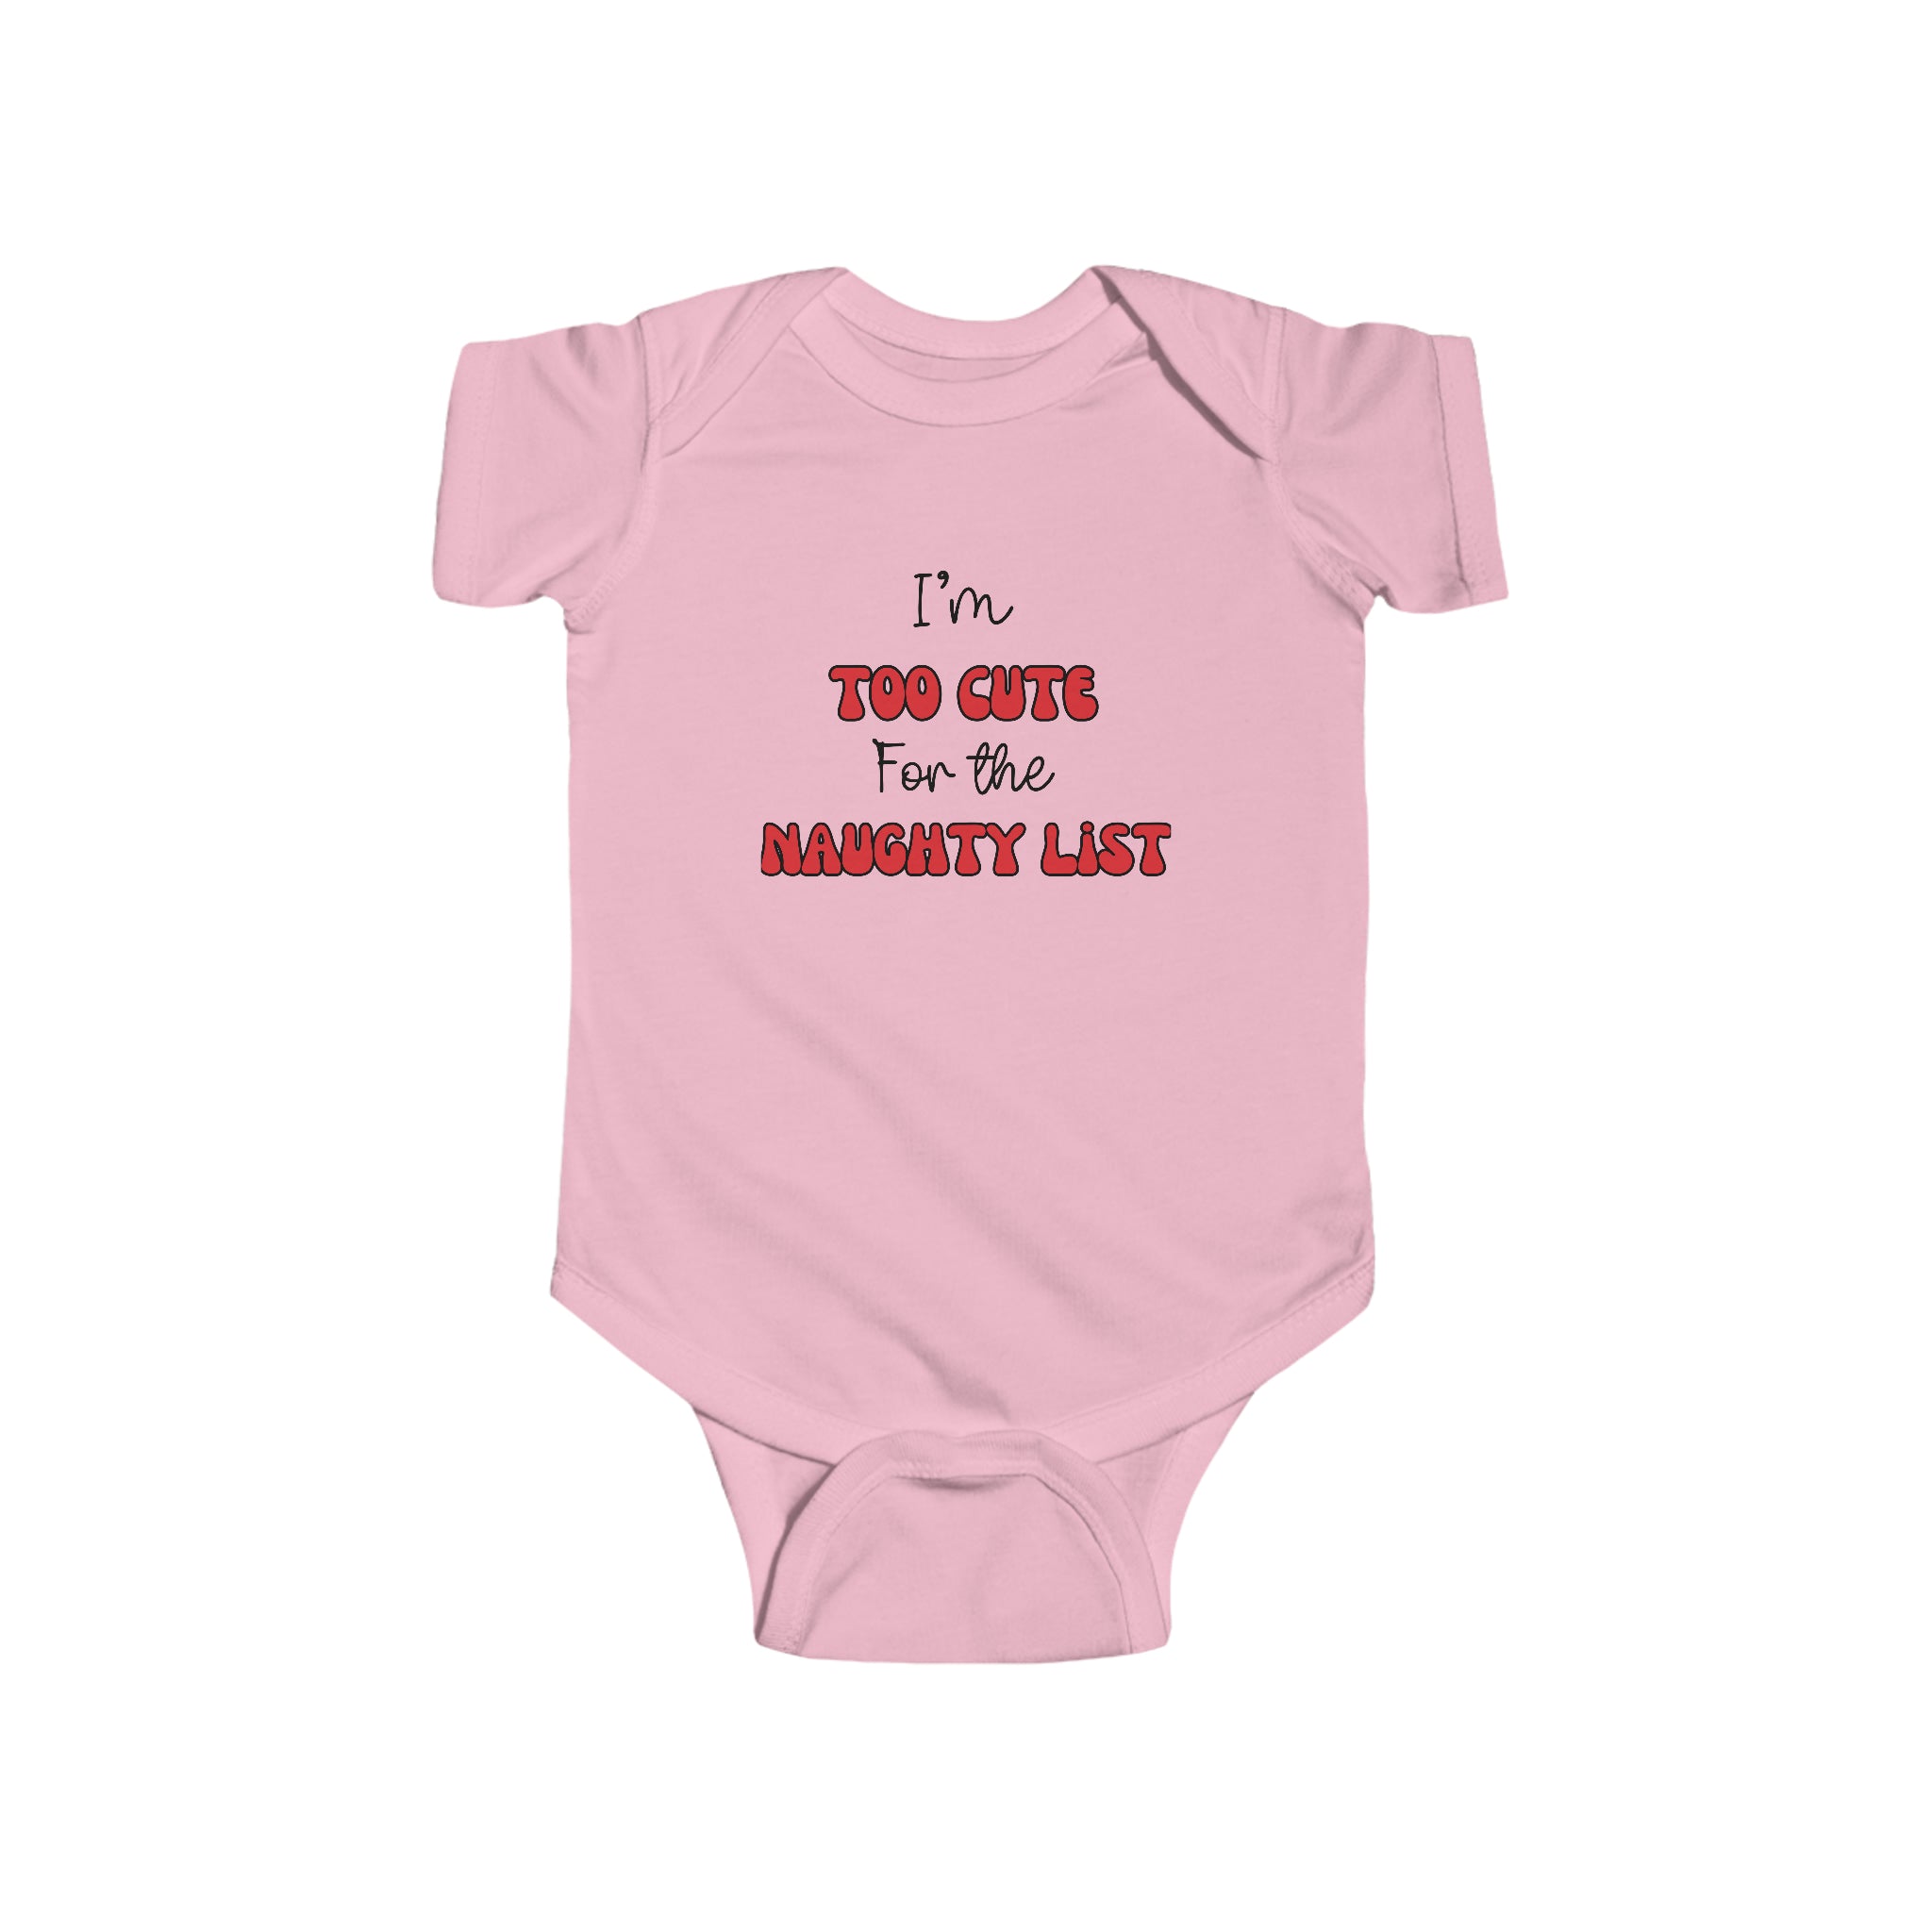 I'm too cute for naughty list Baby Bodysuit, Baby Onesie